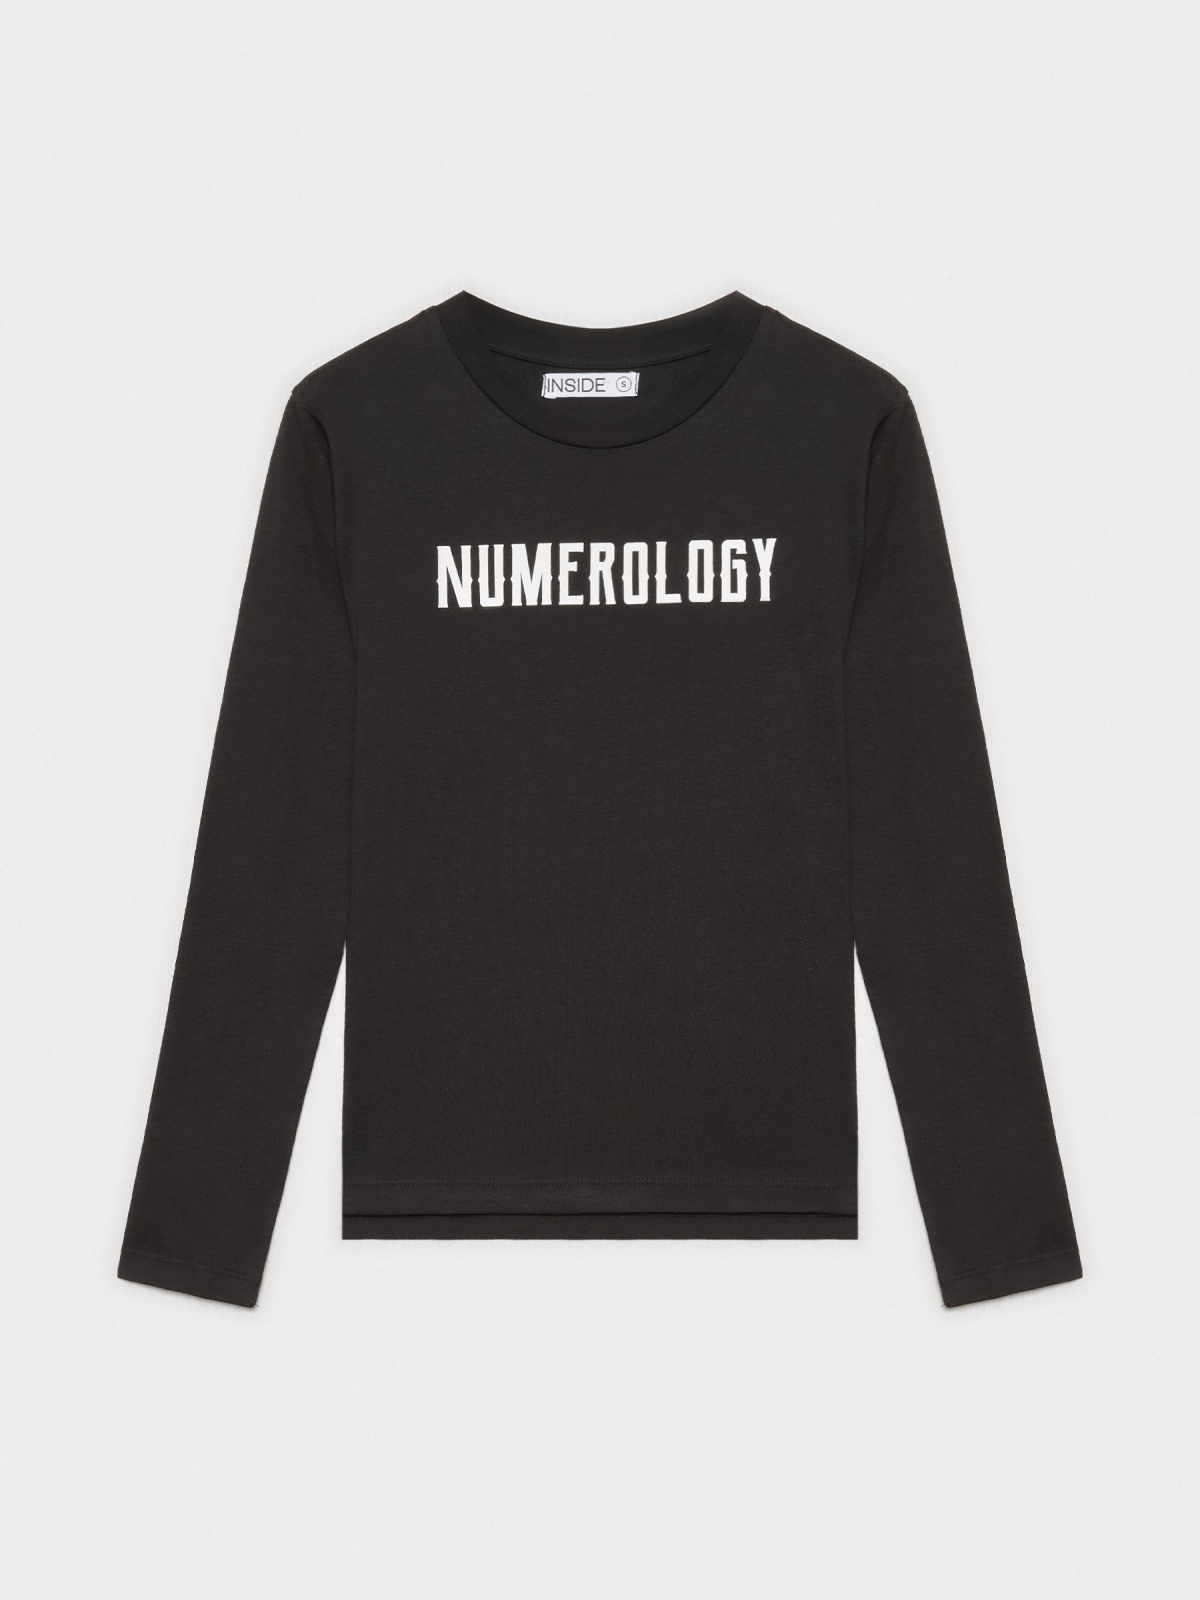  T-shirt preta de numerologia preto